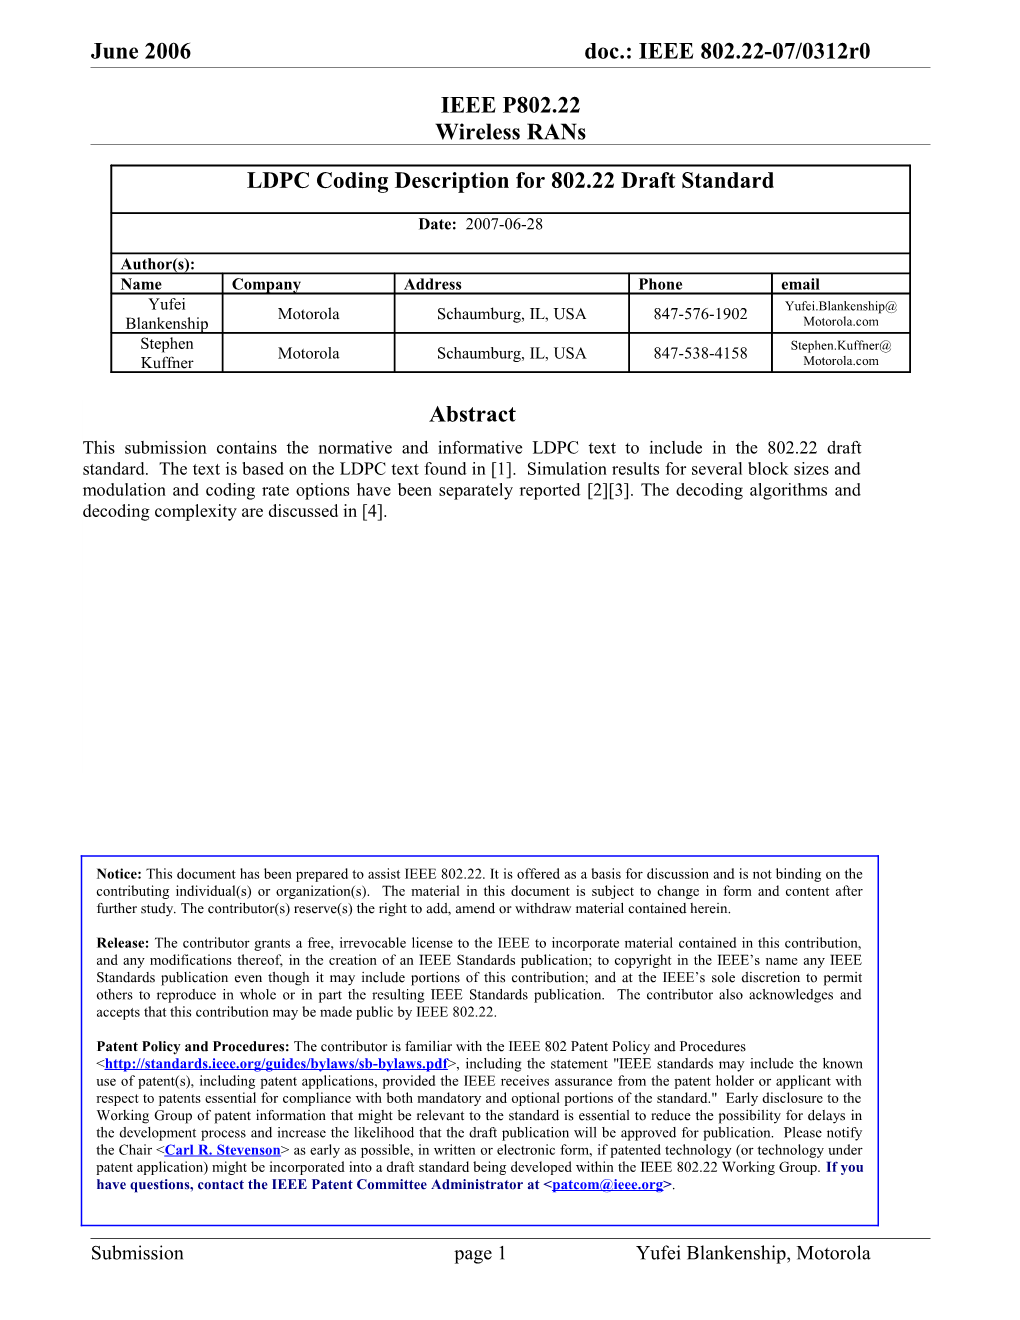 Annex B (Informative) LDPC Direct Encoding